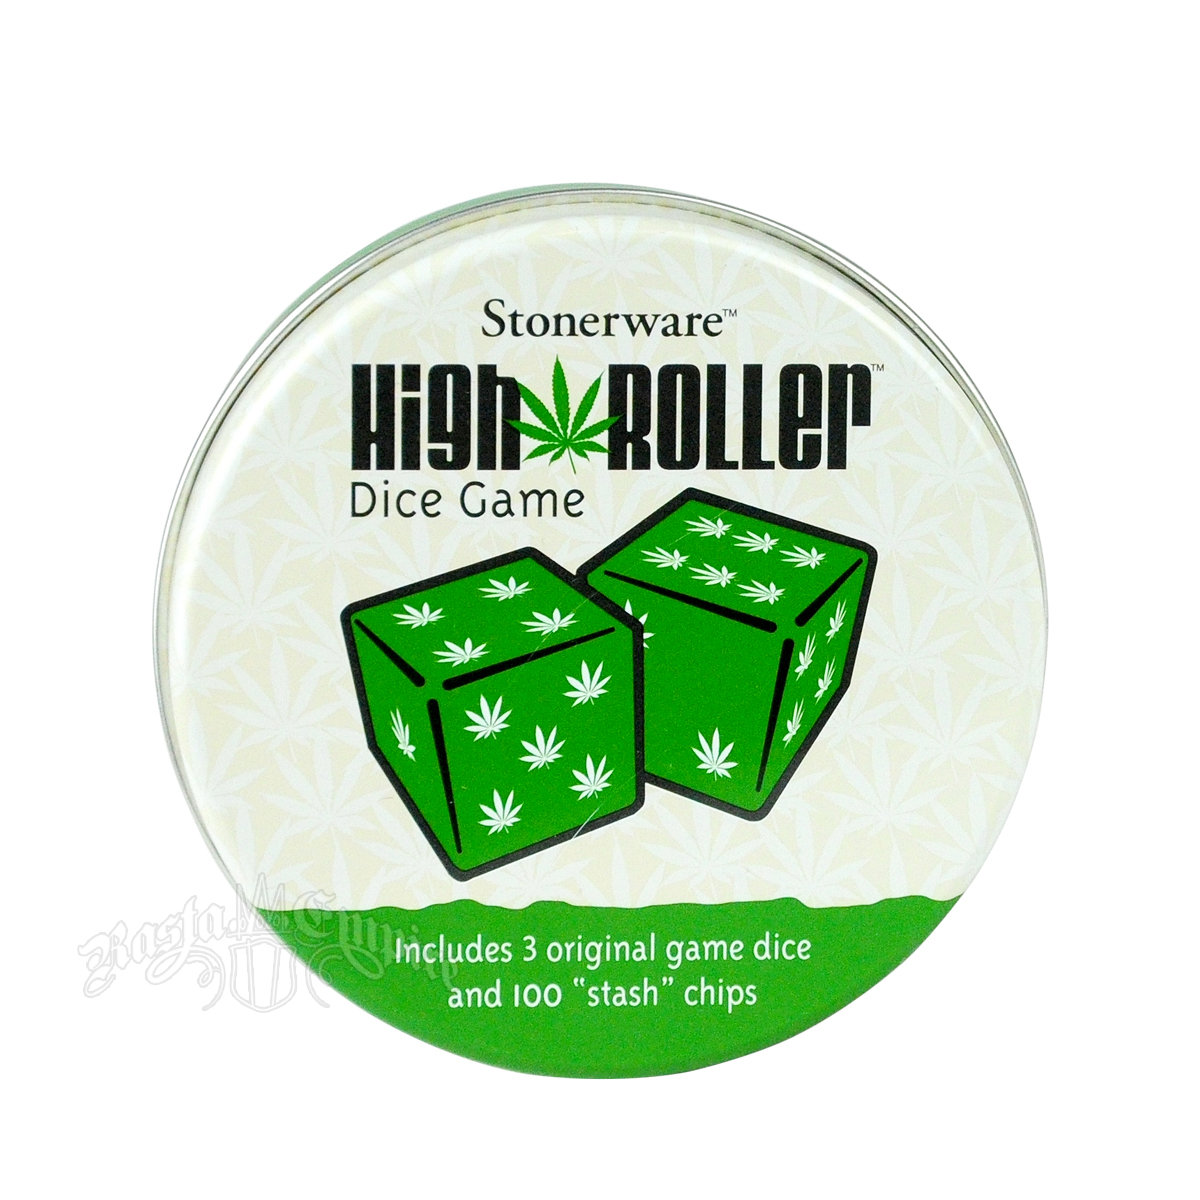 4358-high-roller-dice-game-2.jpg